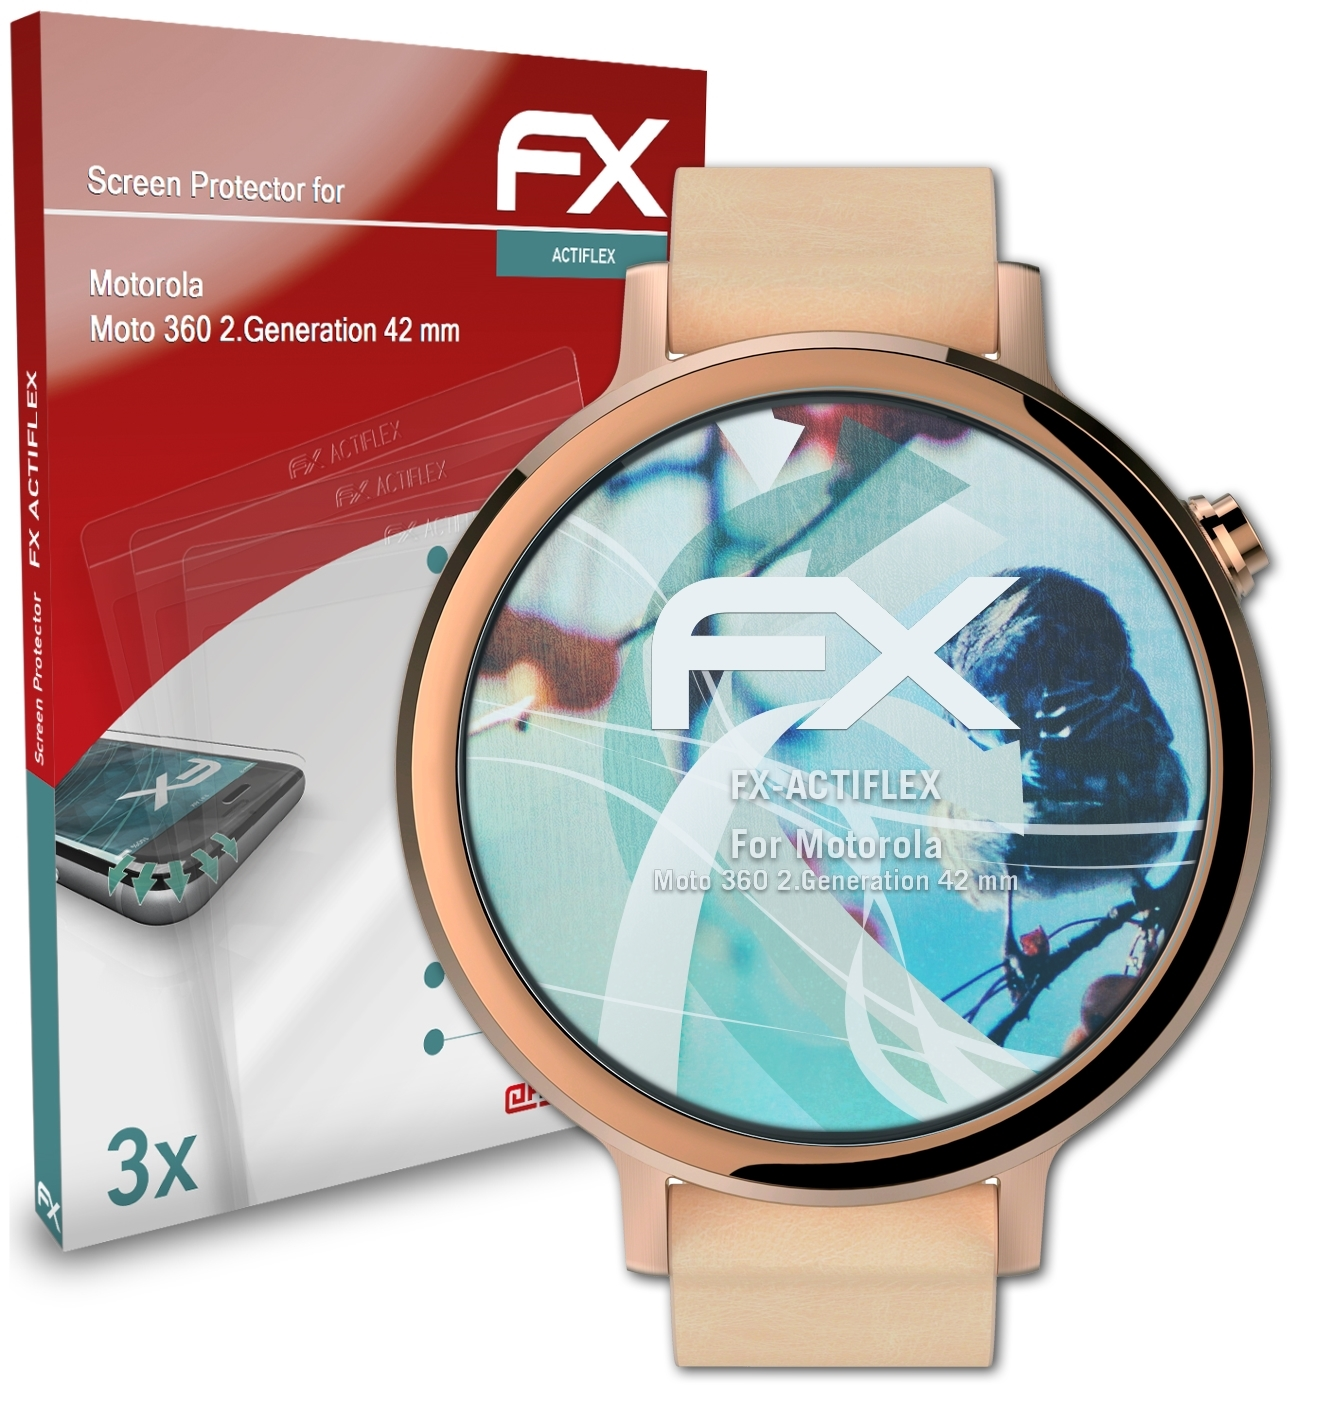 (42 2.Generation ATFOLIX Displayschutz(für 360 mm)) Motorola Moto 3x FX-ActiFleX